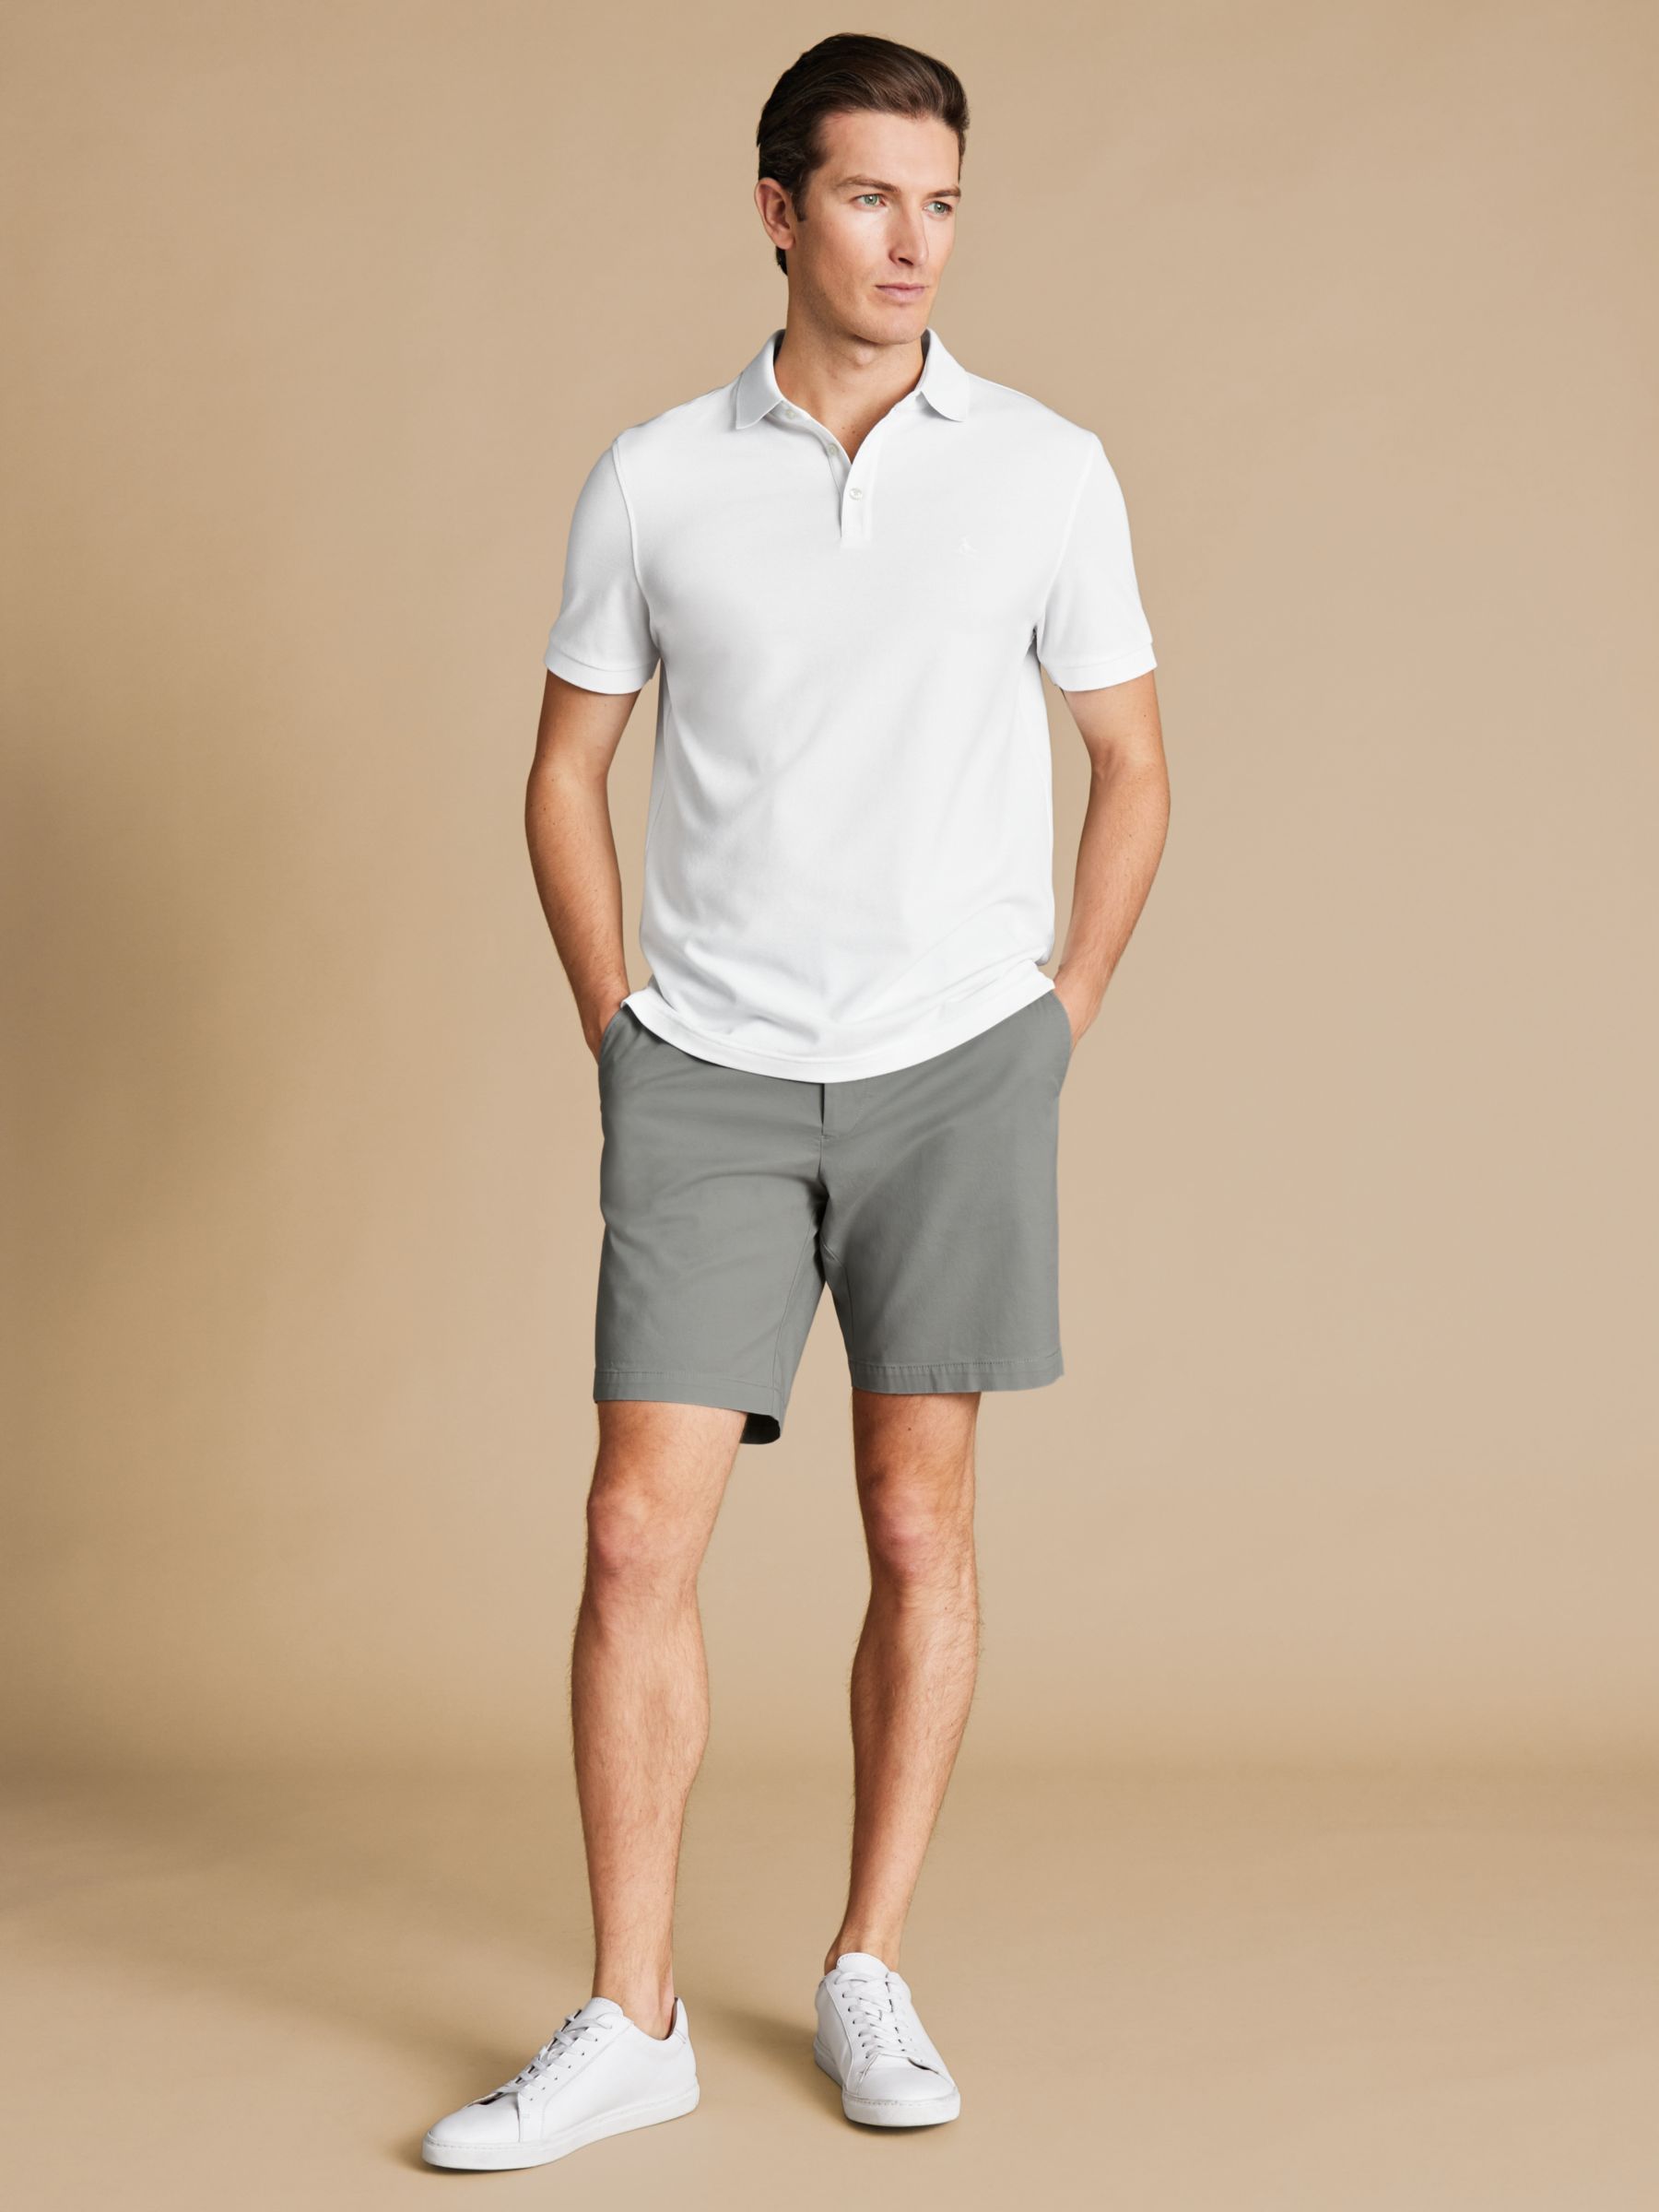 Charles Tyrwhitt Cotton Stretch Chino Shorts, Light Grey, 36